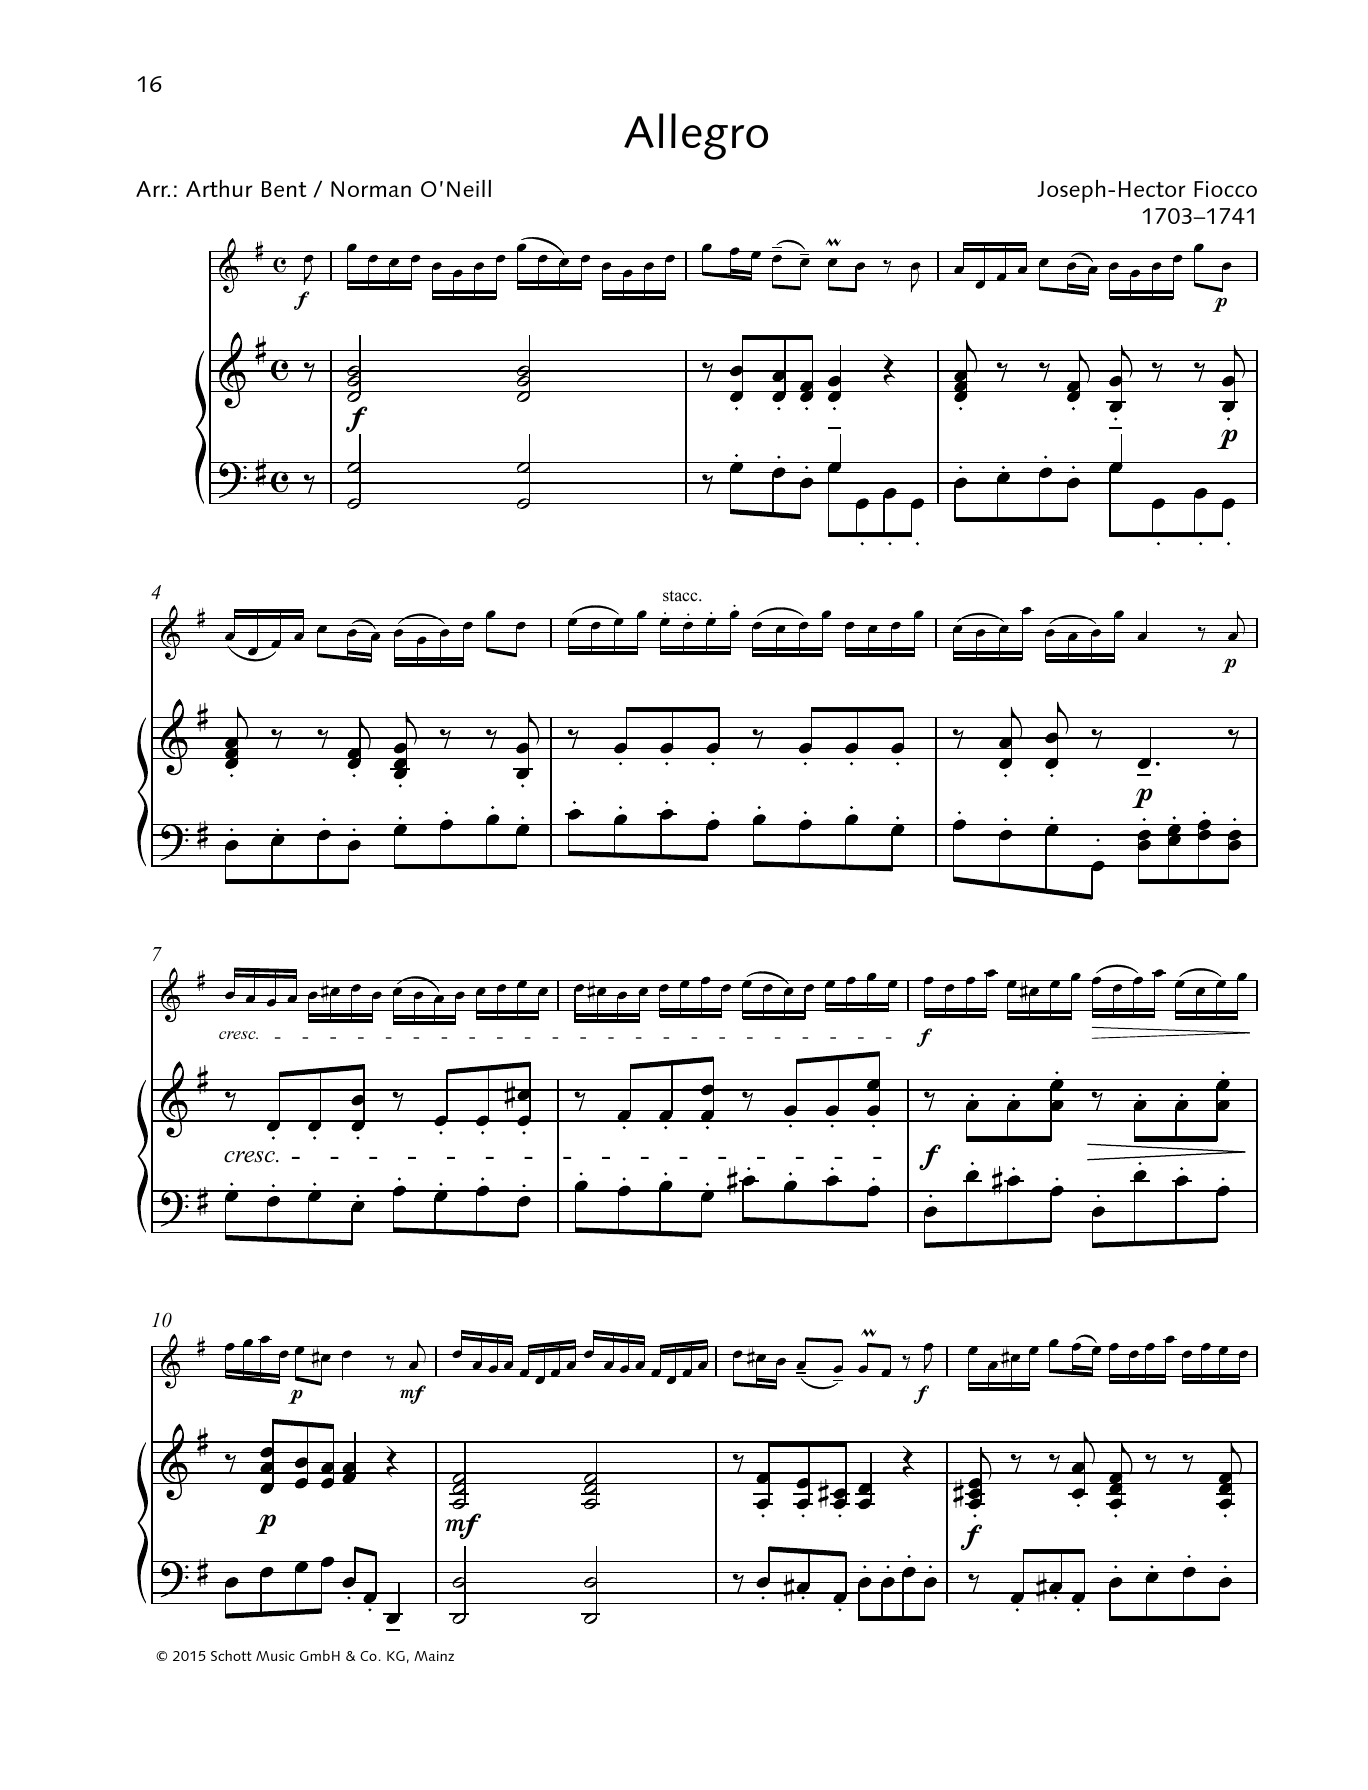 Joseph-Hector Fiocco Allegro sheet music notes printable PDF score